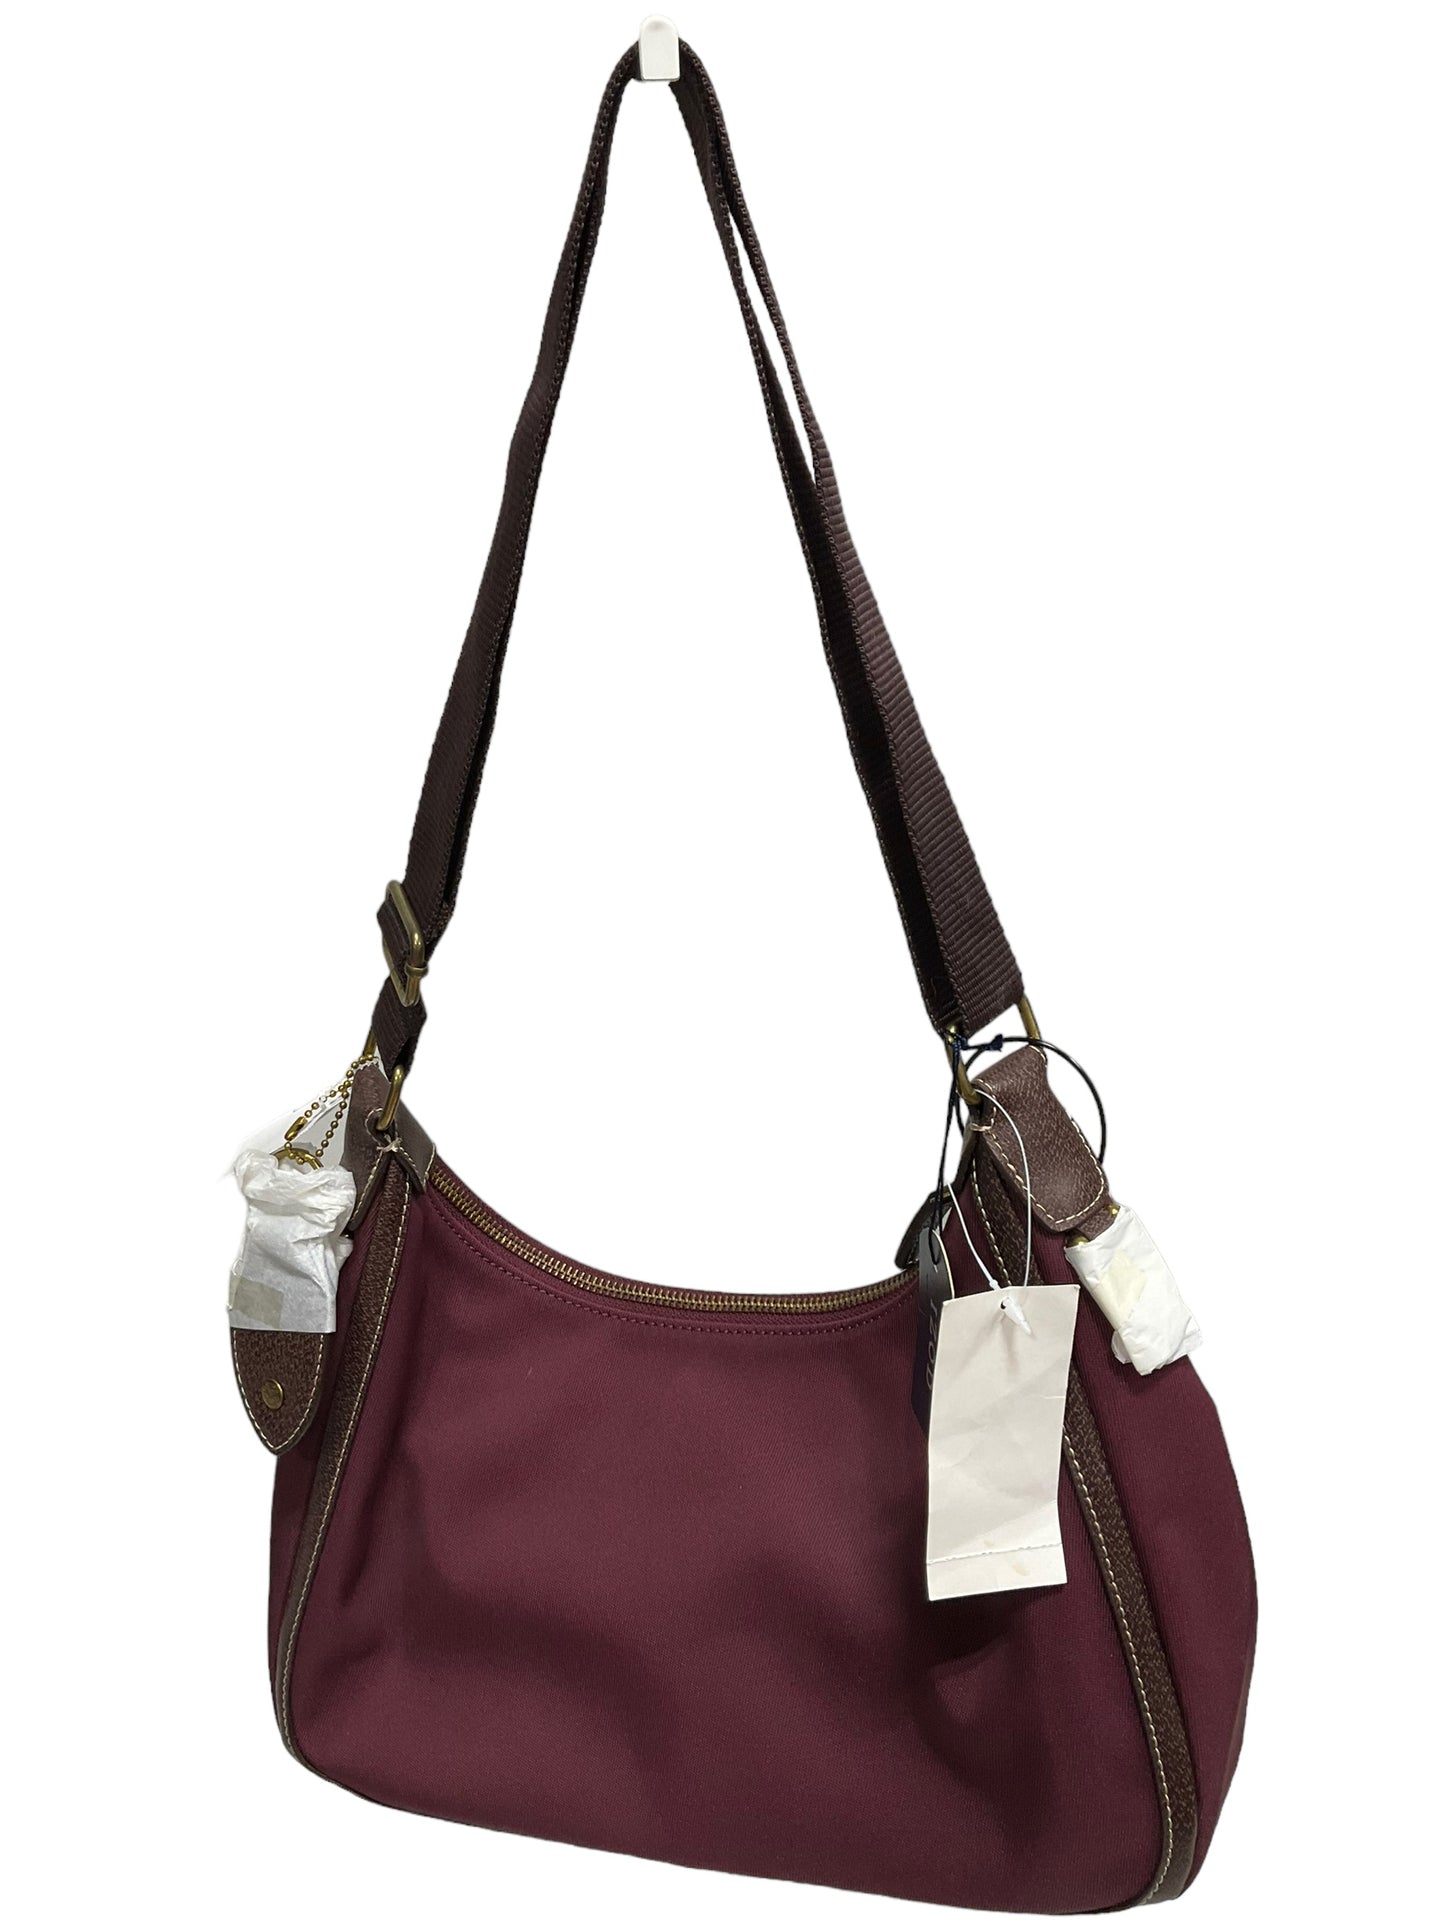 Handbag By Izod  Size: Medium